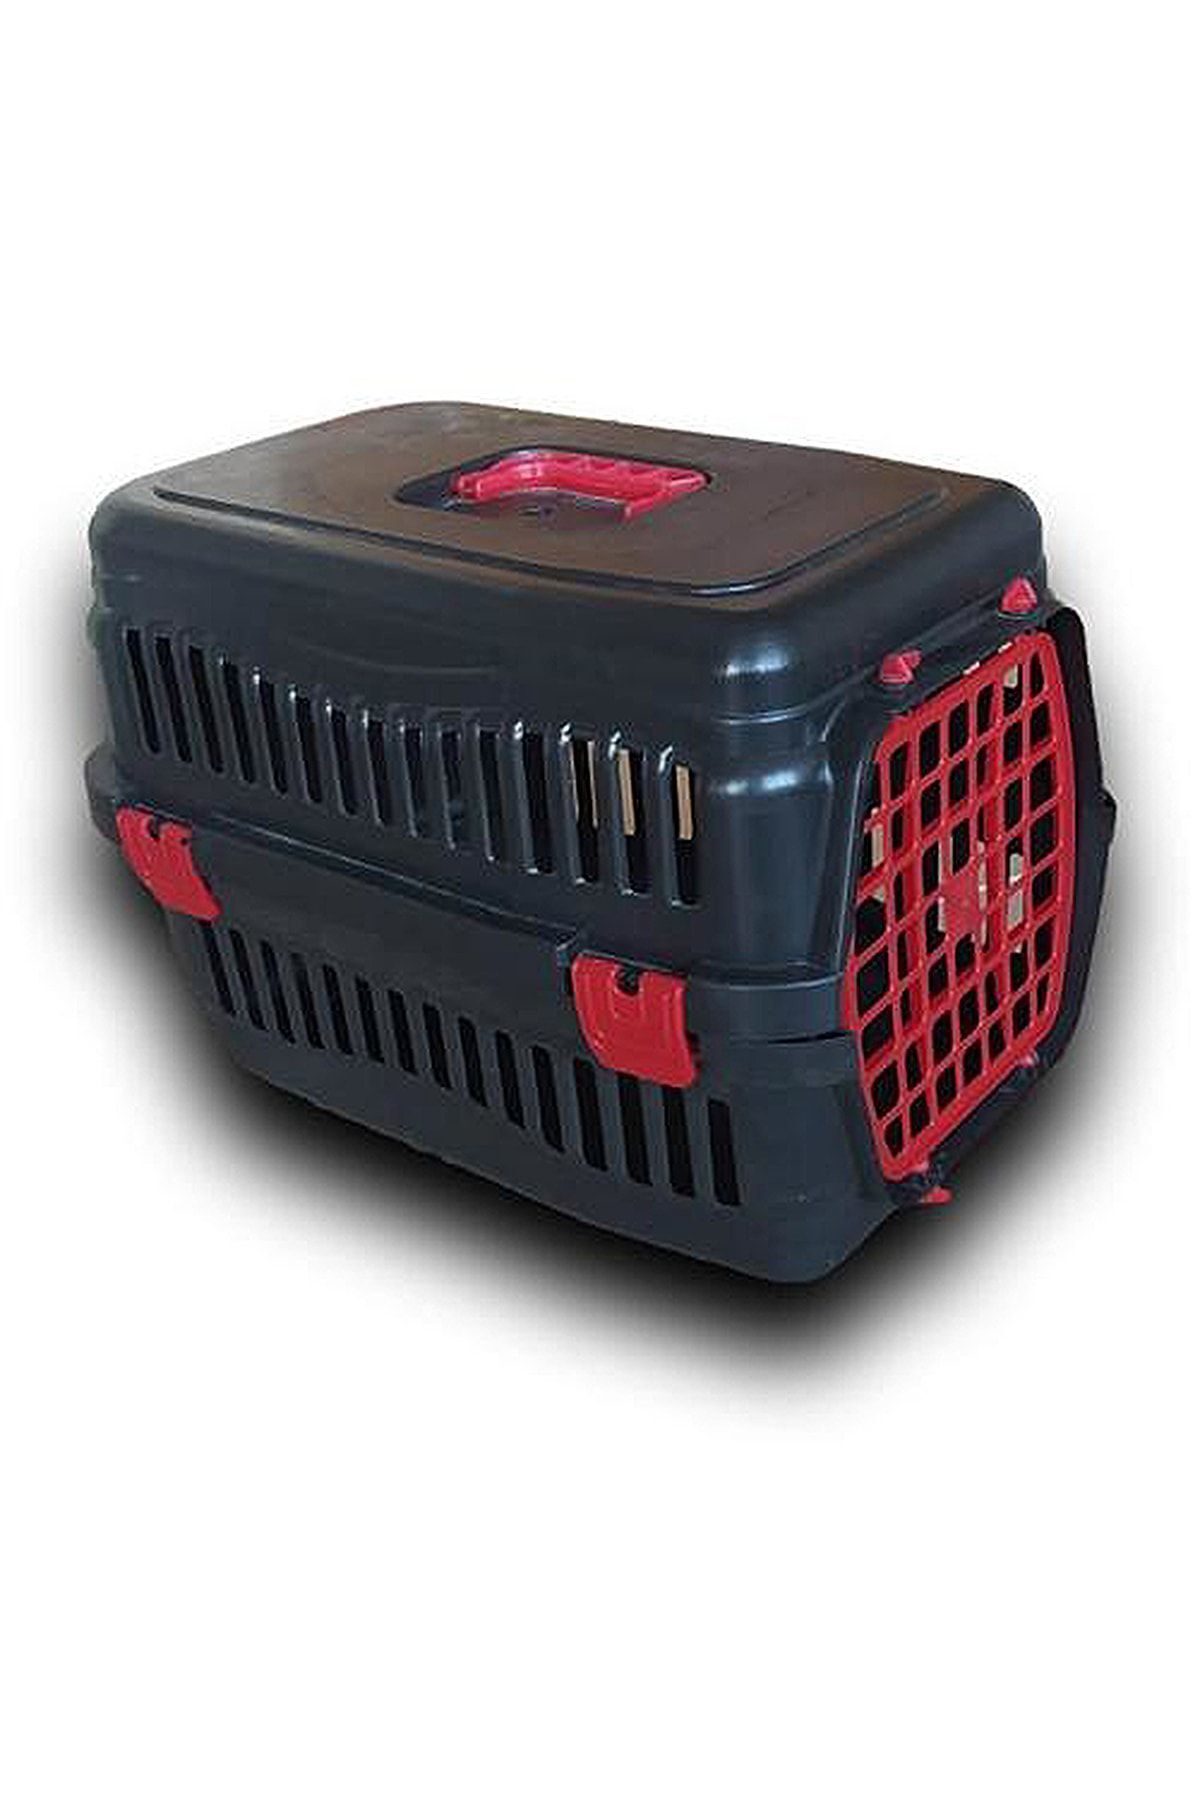 GÖKCAN PET Kırmızı Kedi Köpek Taşıma Çantası Box Xxl Büyük Boy 55x40x40 Cm